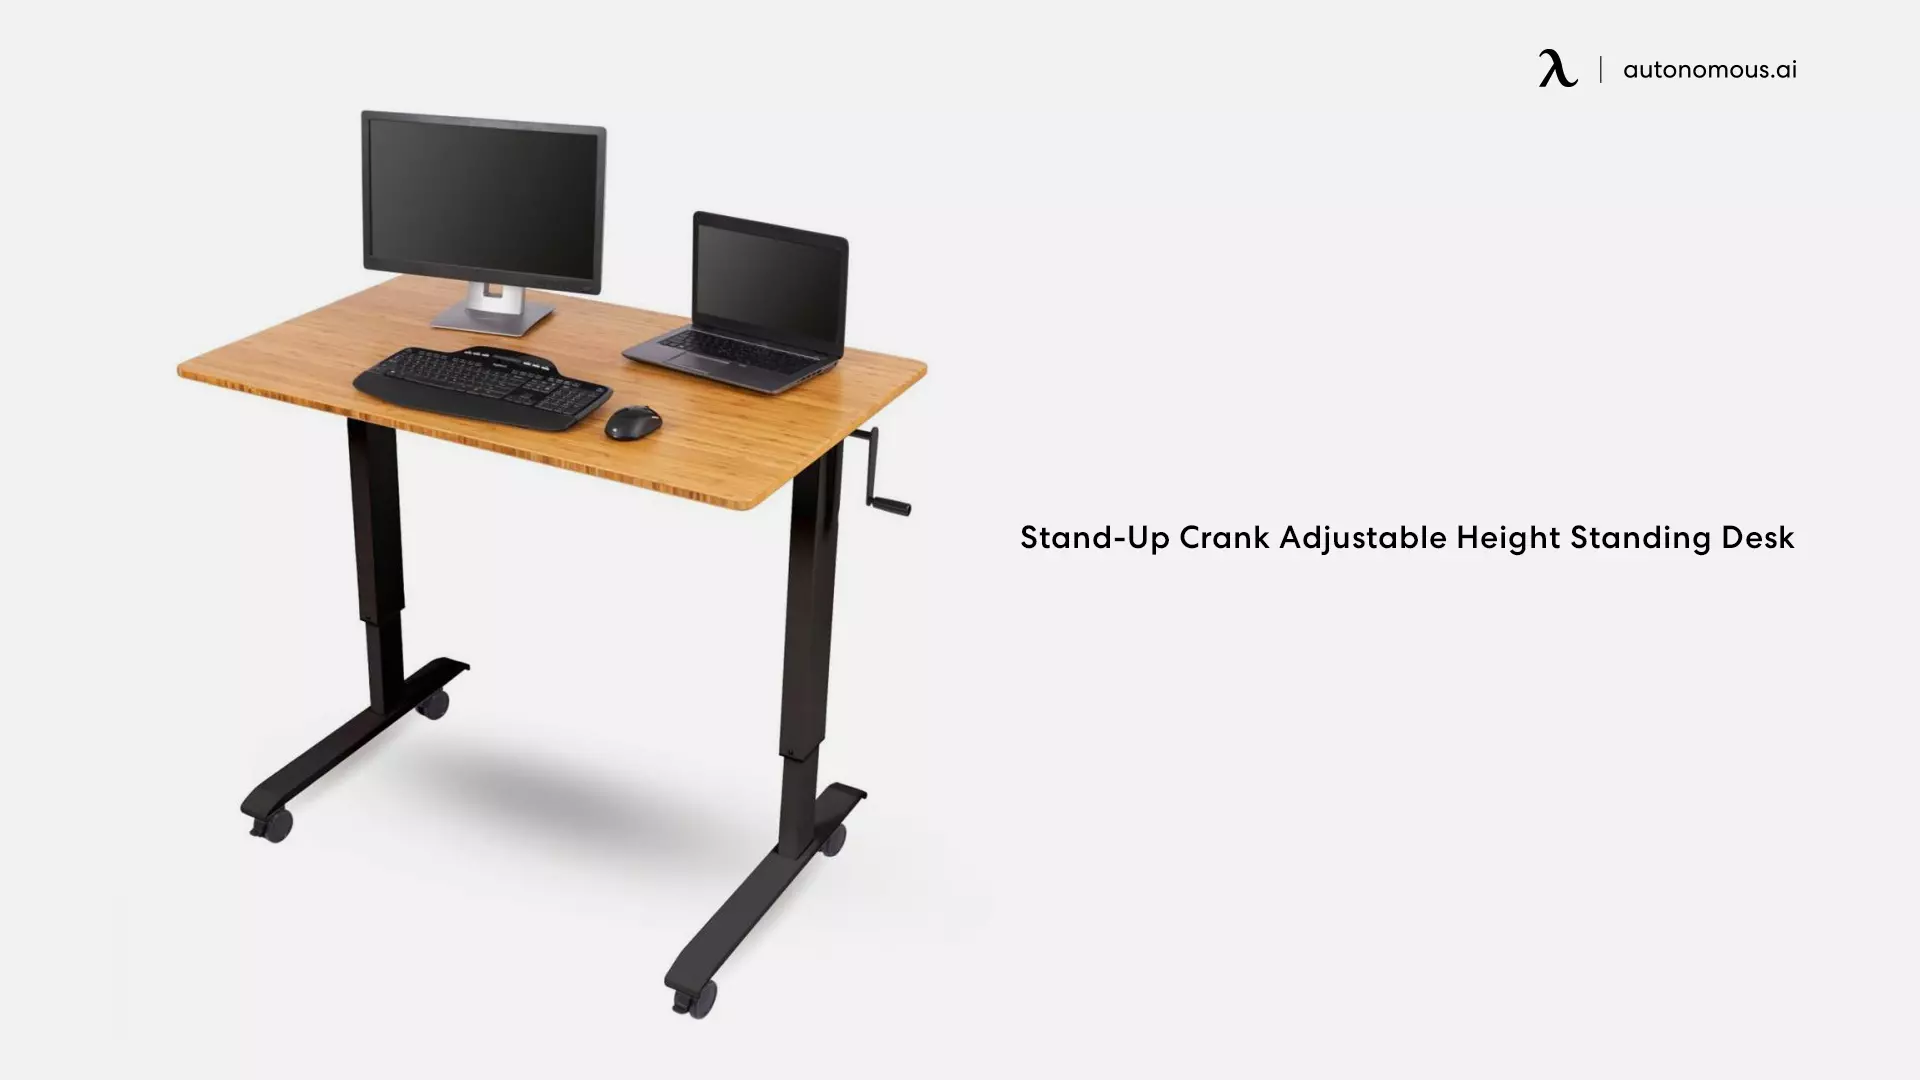 Stand-Up Crank Adjustable Height Standing Desk